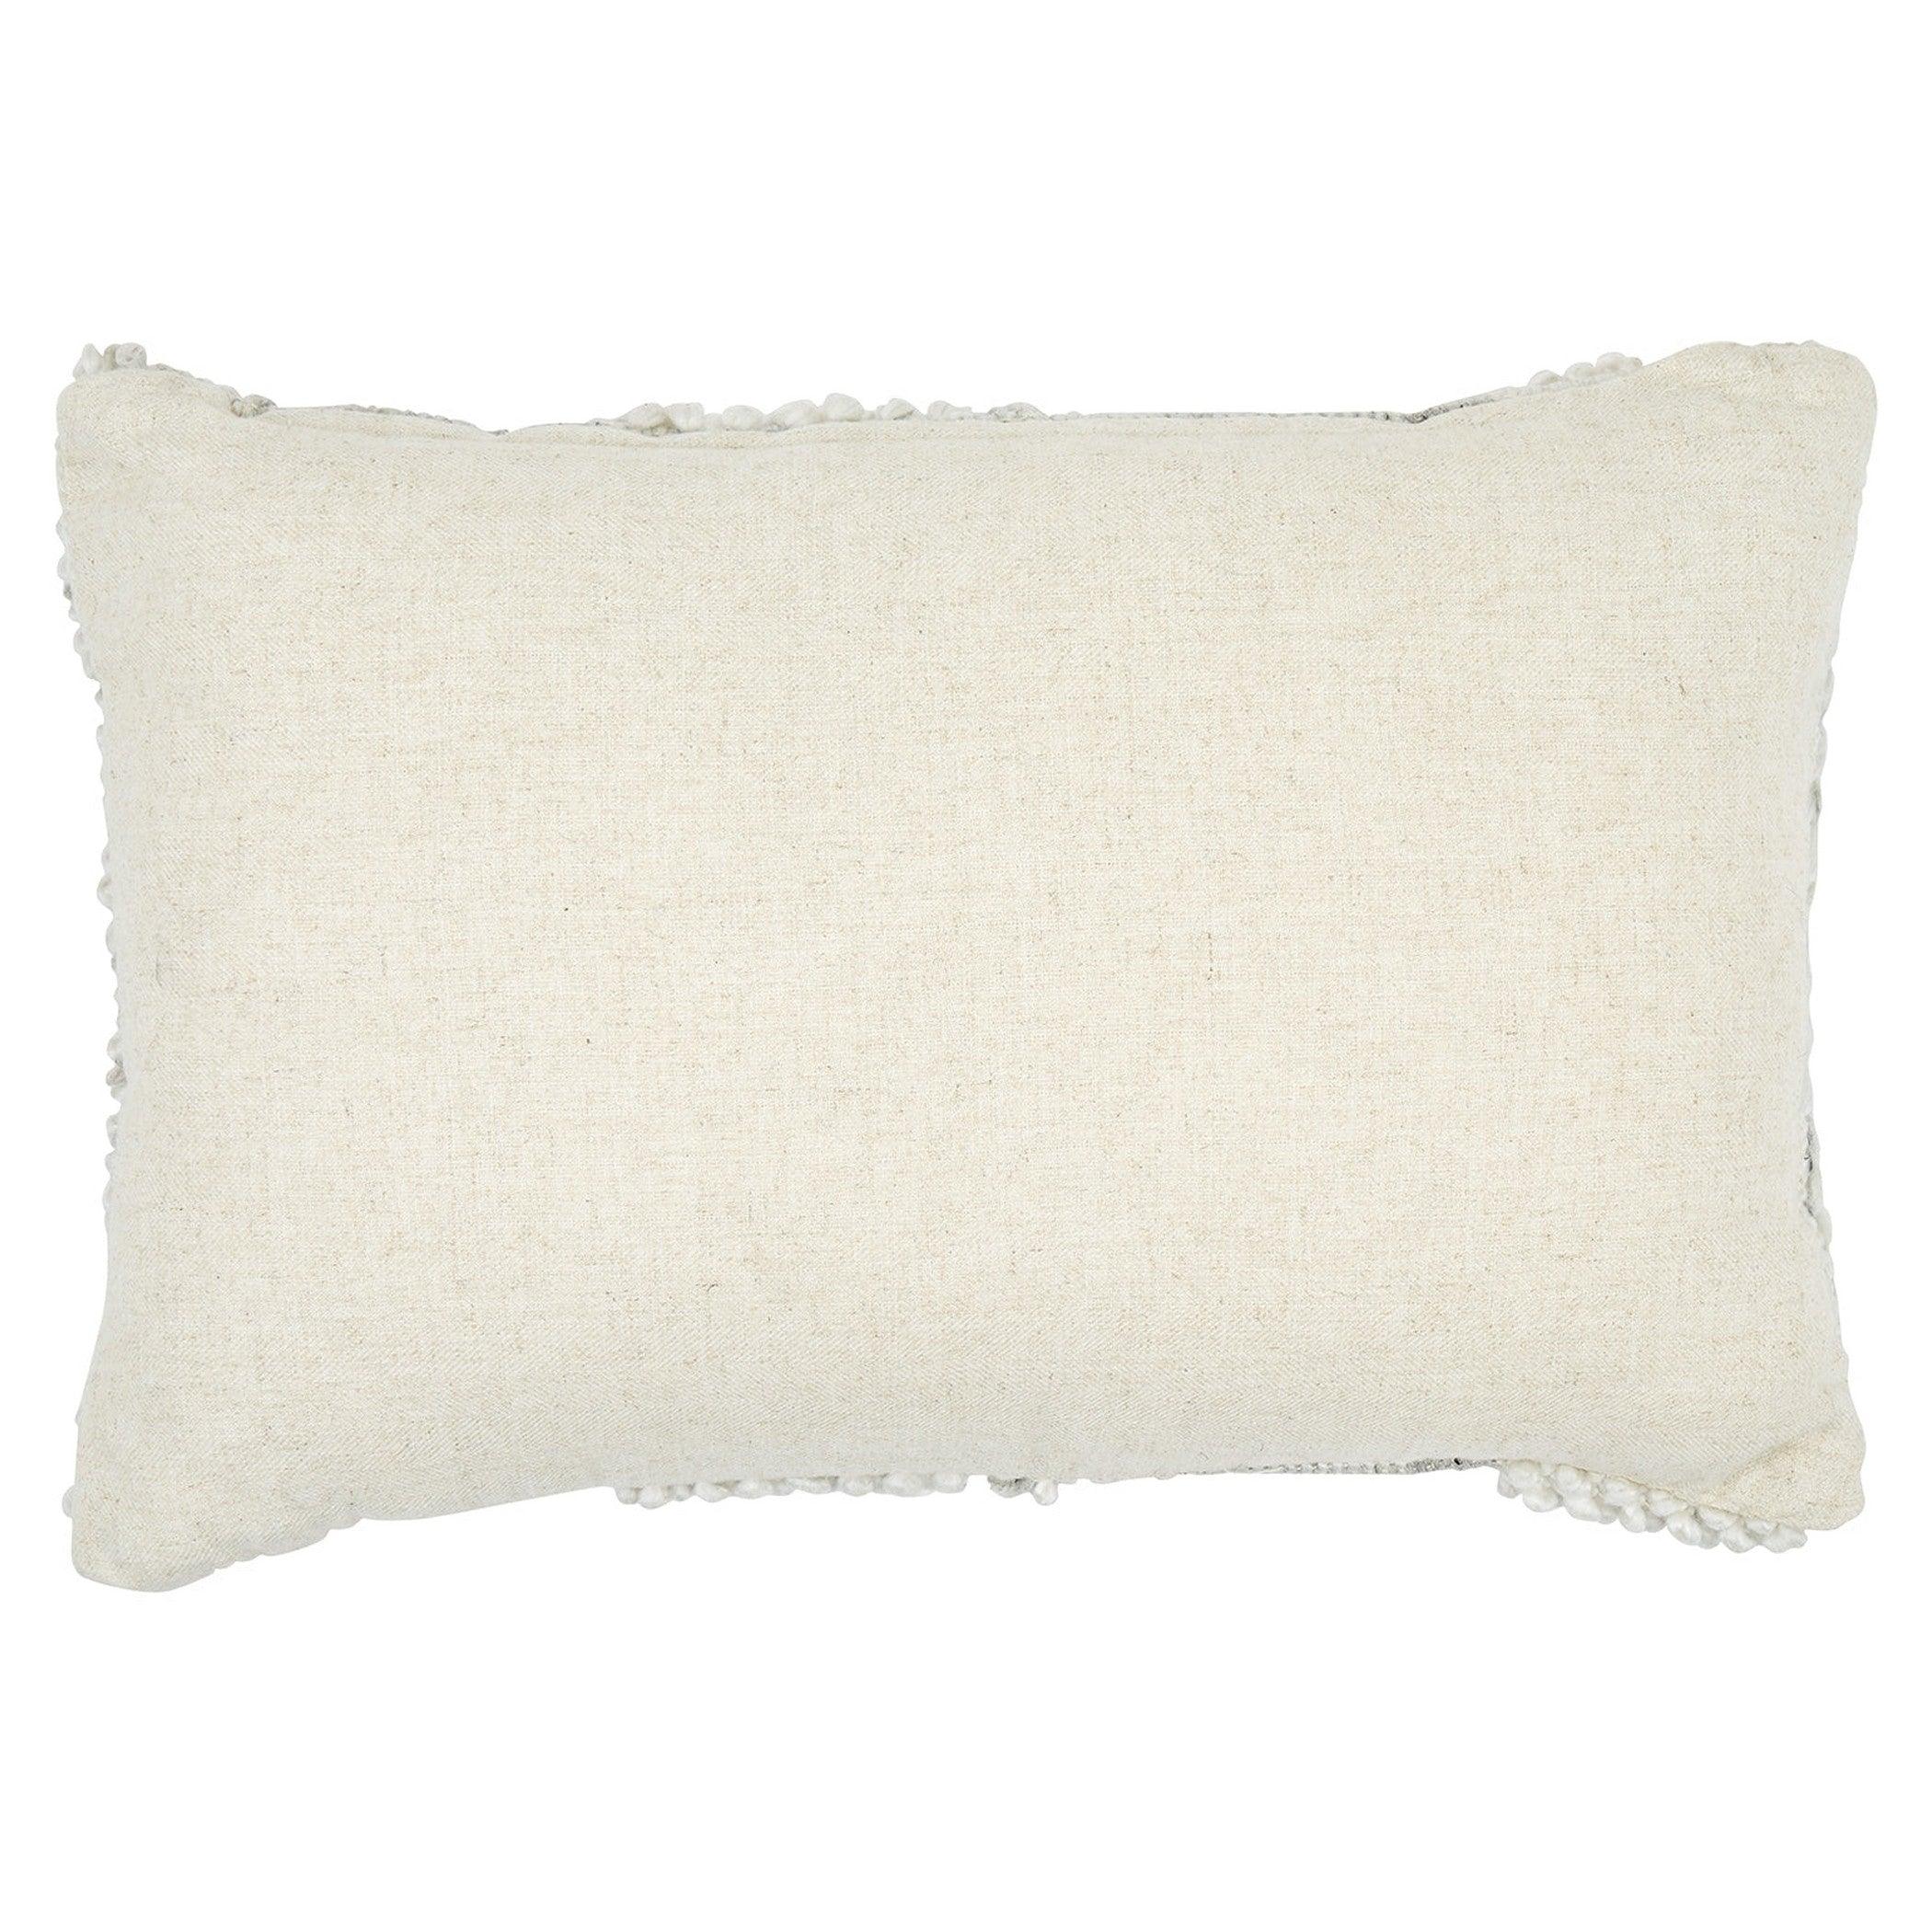 Standon Pillow (Set of 4) Ash-A1001005